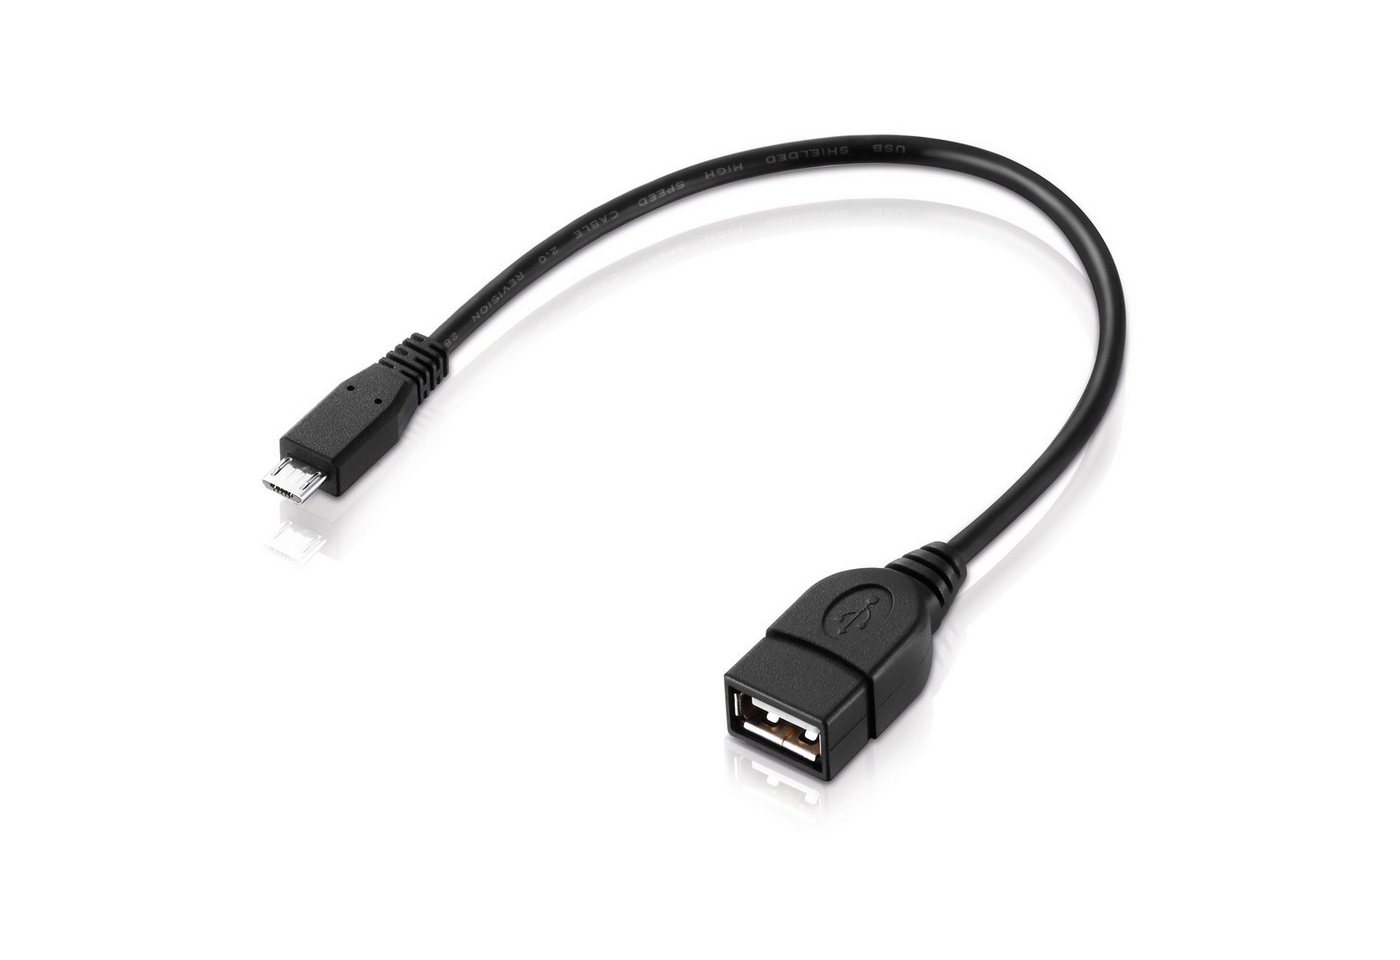 adaptare adaptare 40225 USB-OTG Adapter-Kabel Micro-USB 2.0-Stecker USB-Buchse USB-Kabel von adaptare